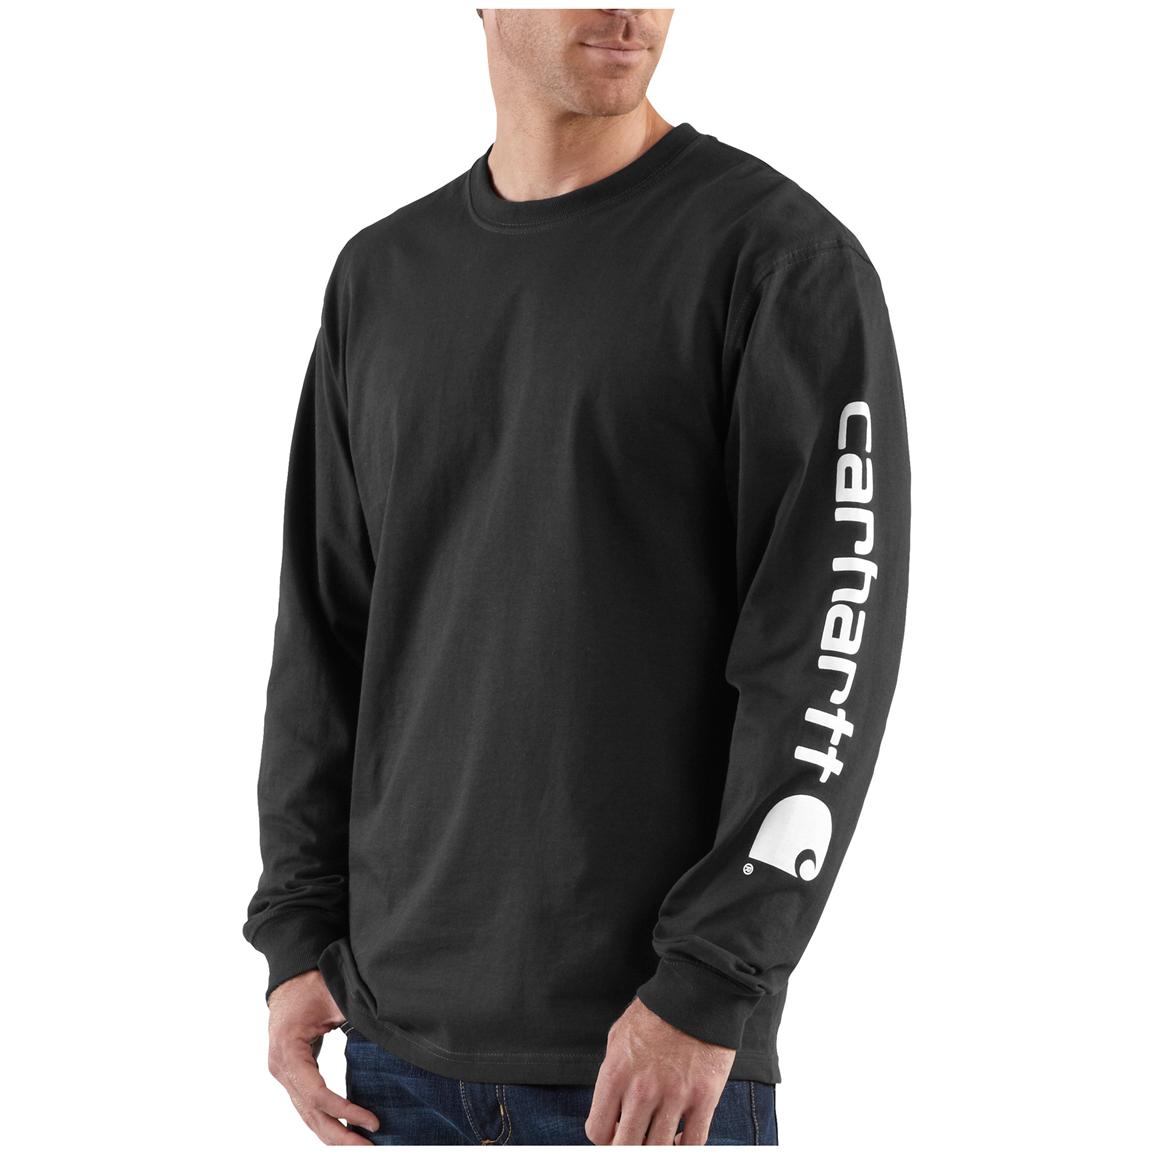 Carhartt® Long Sleeve T - Shirt - 169969, T-Shirts at Sportsman's Guide